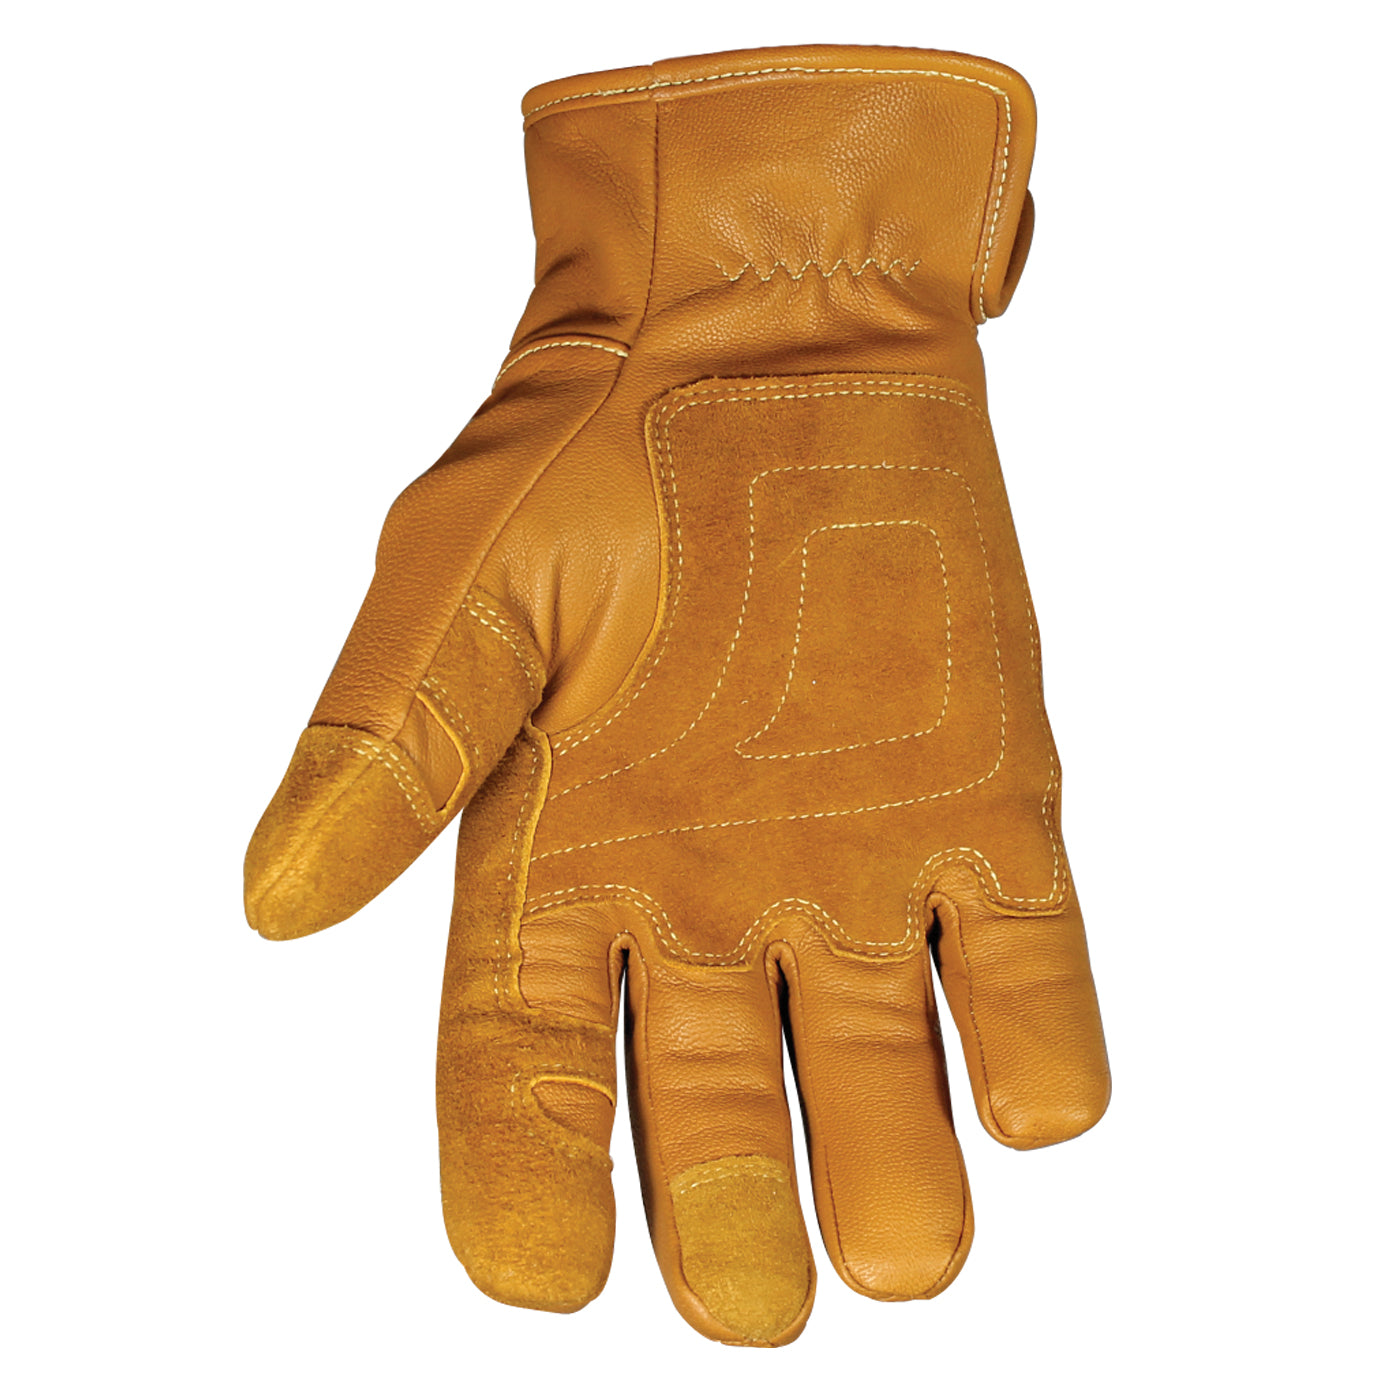 Camo Utility Work Gloves (Men's M)